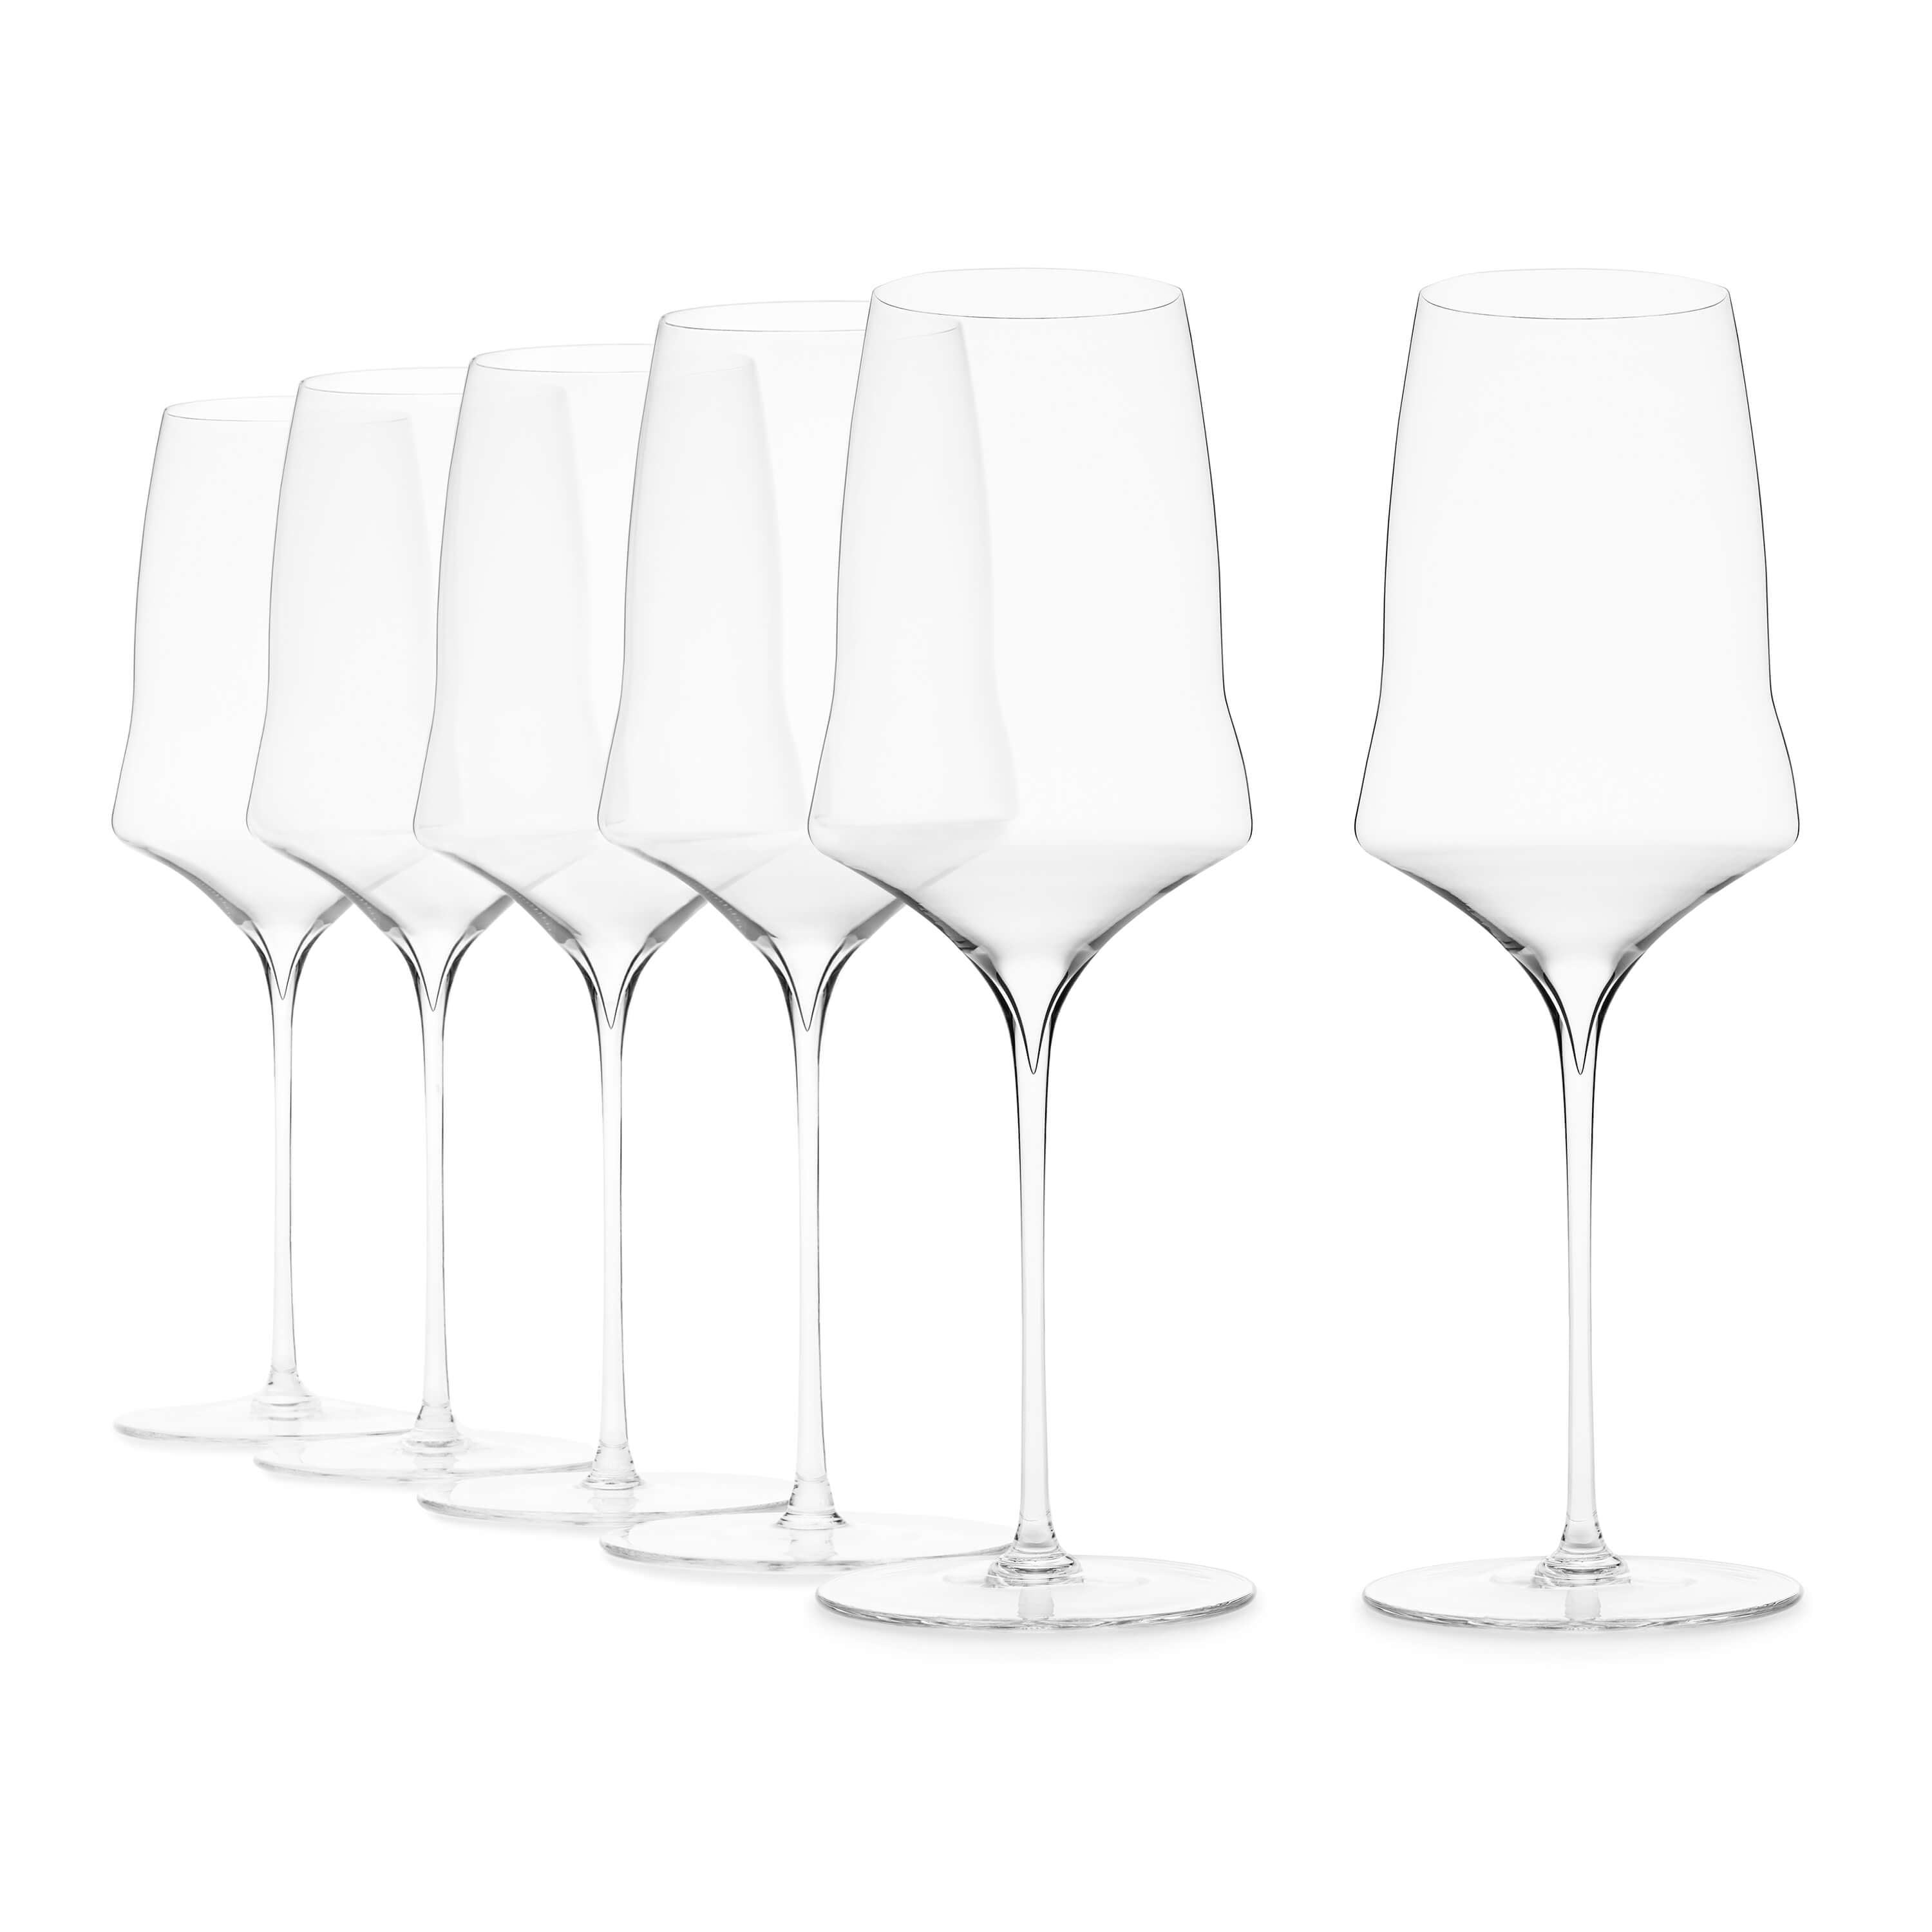 Josephine No 1 – White wine glass – Set of 6